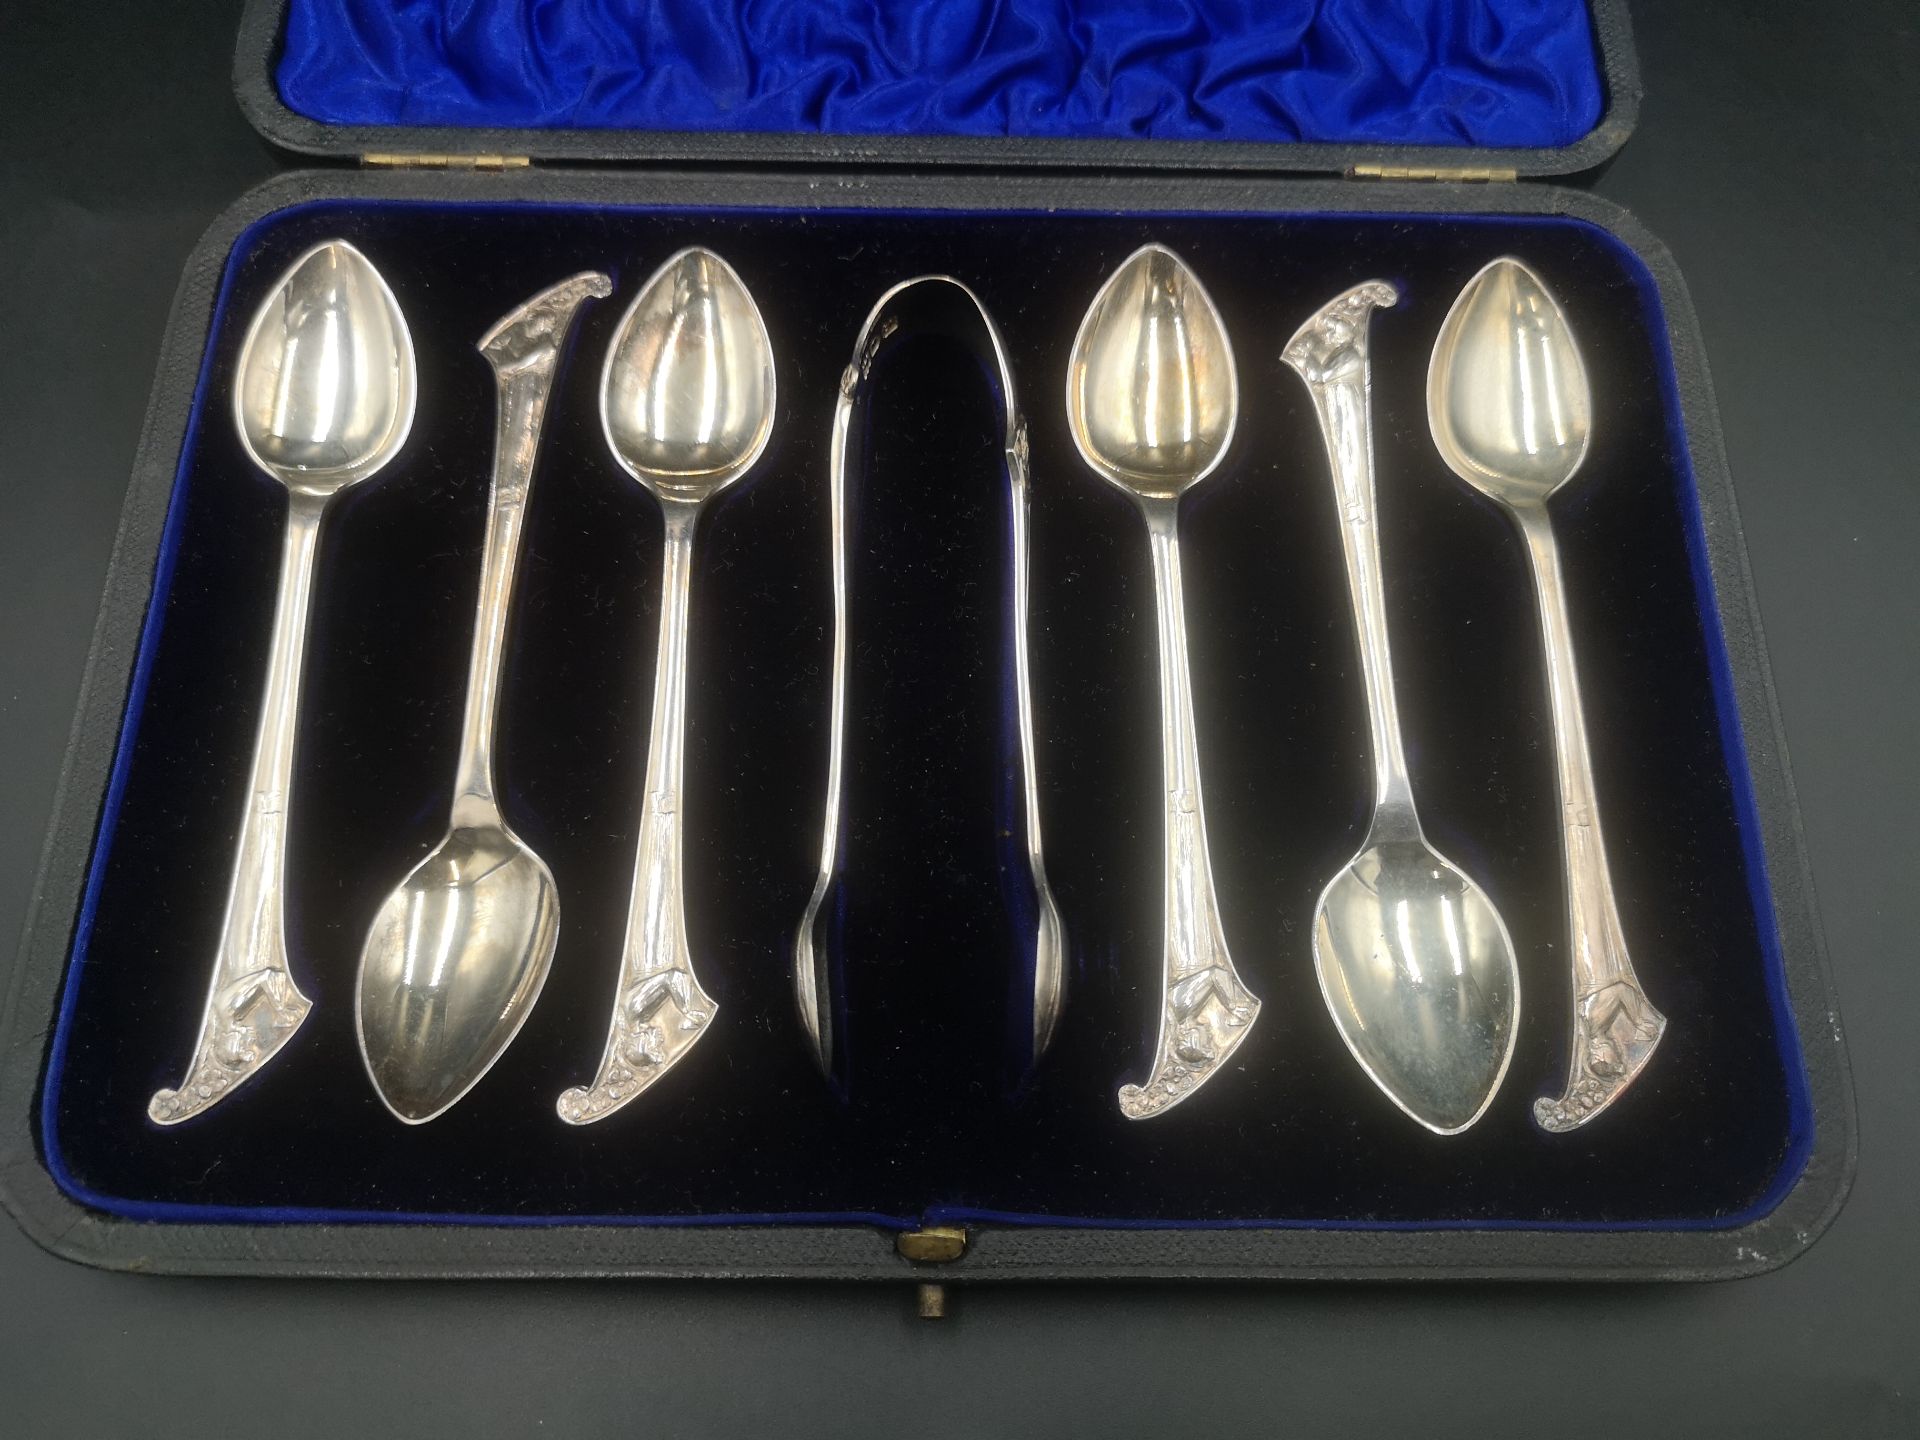 Boxed set of art nouveau silver tea spoons and sugar tongs - Image 5 of 5